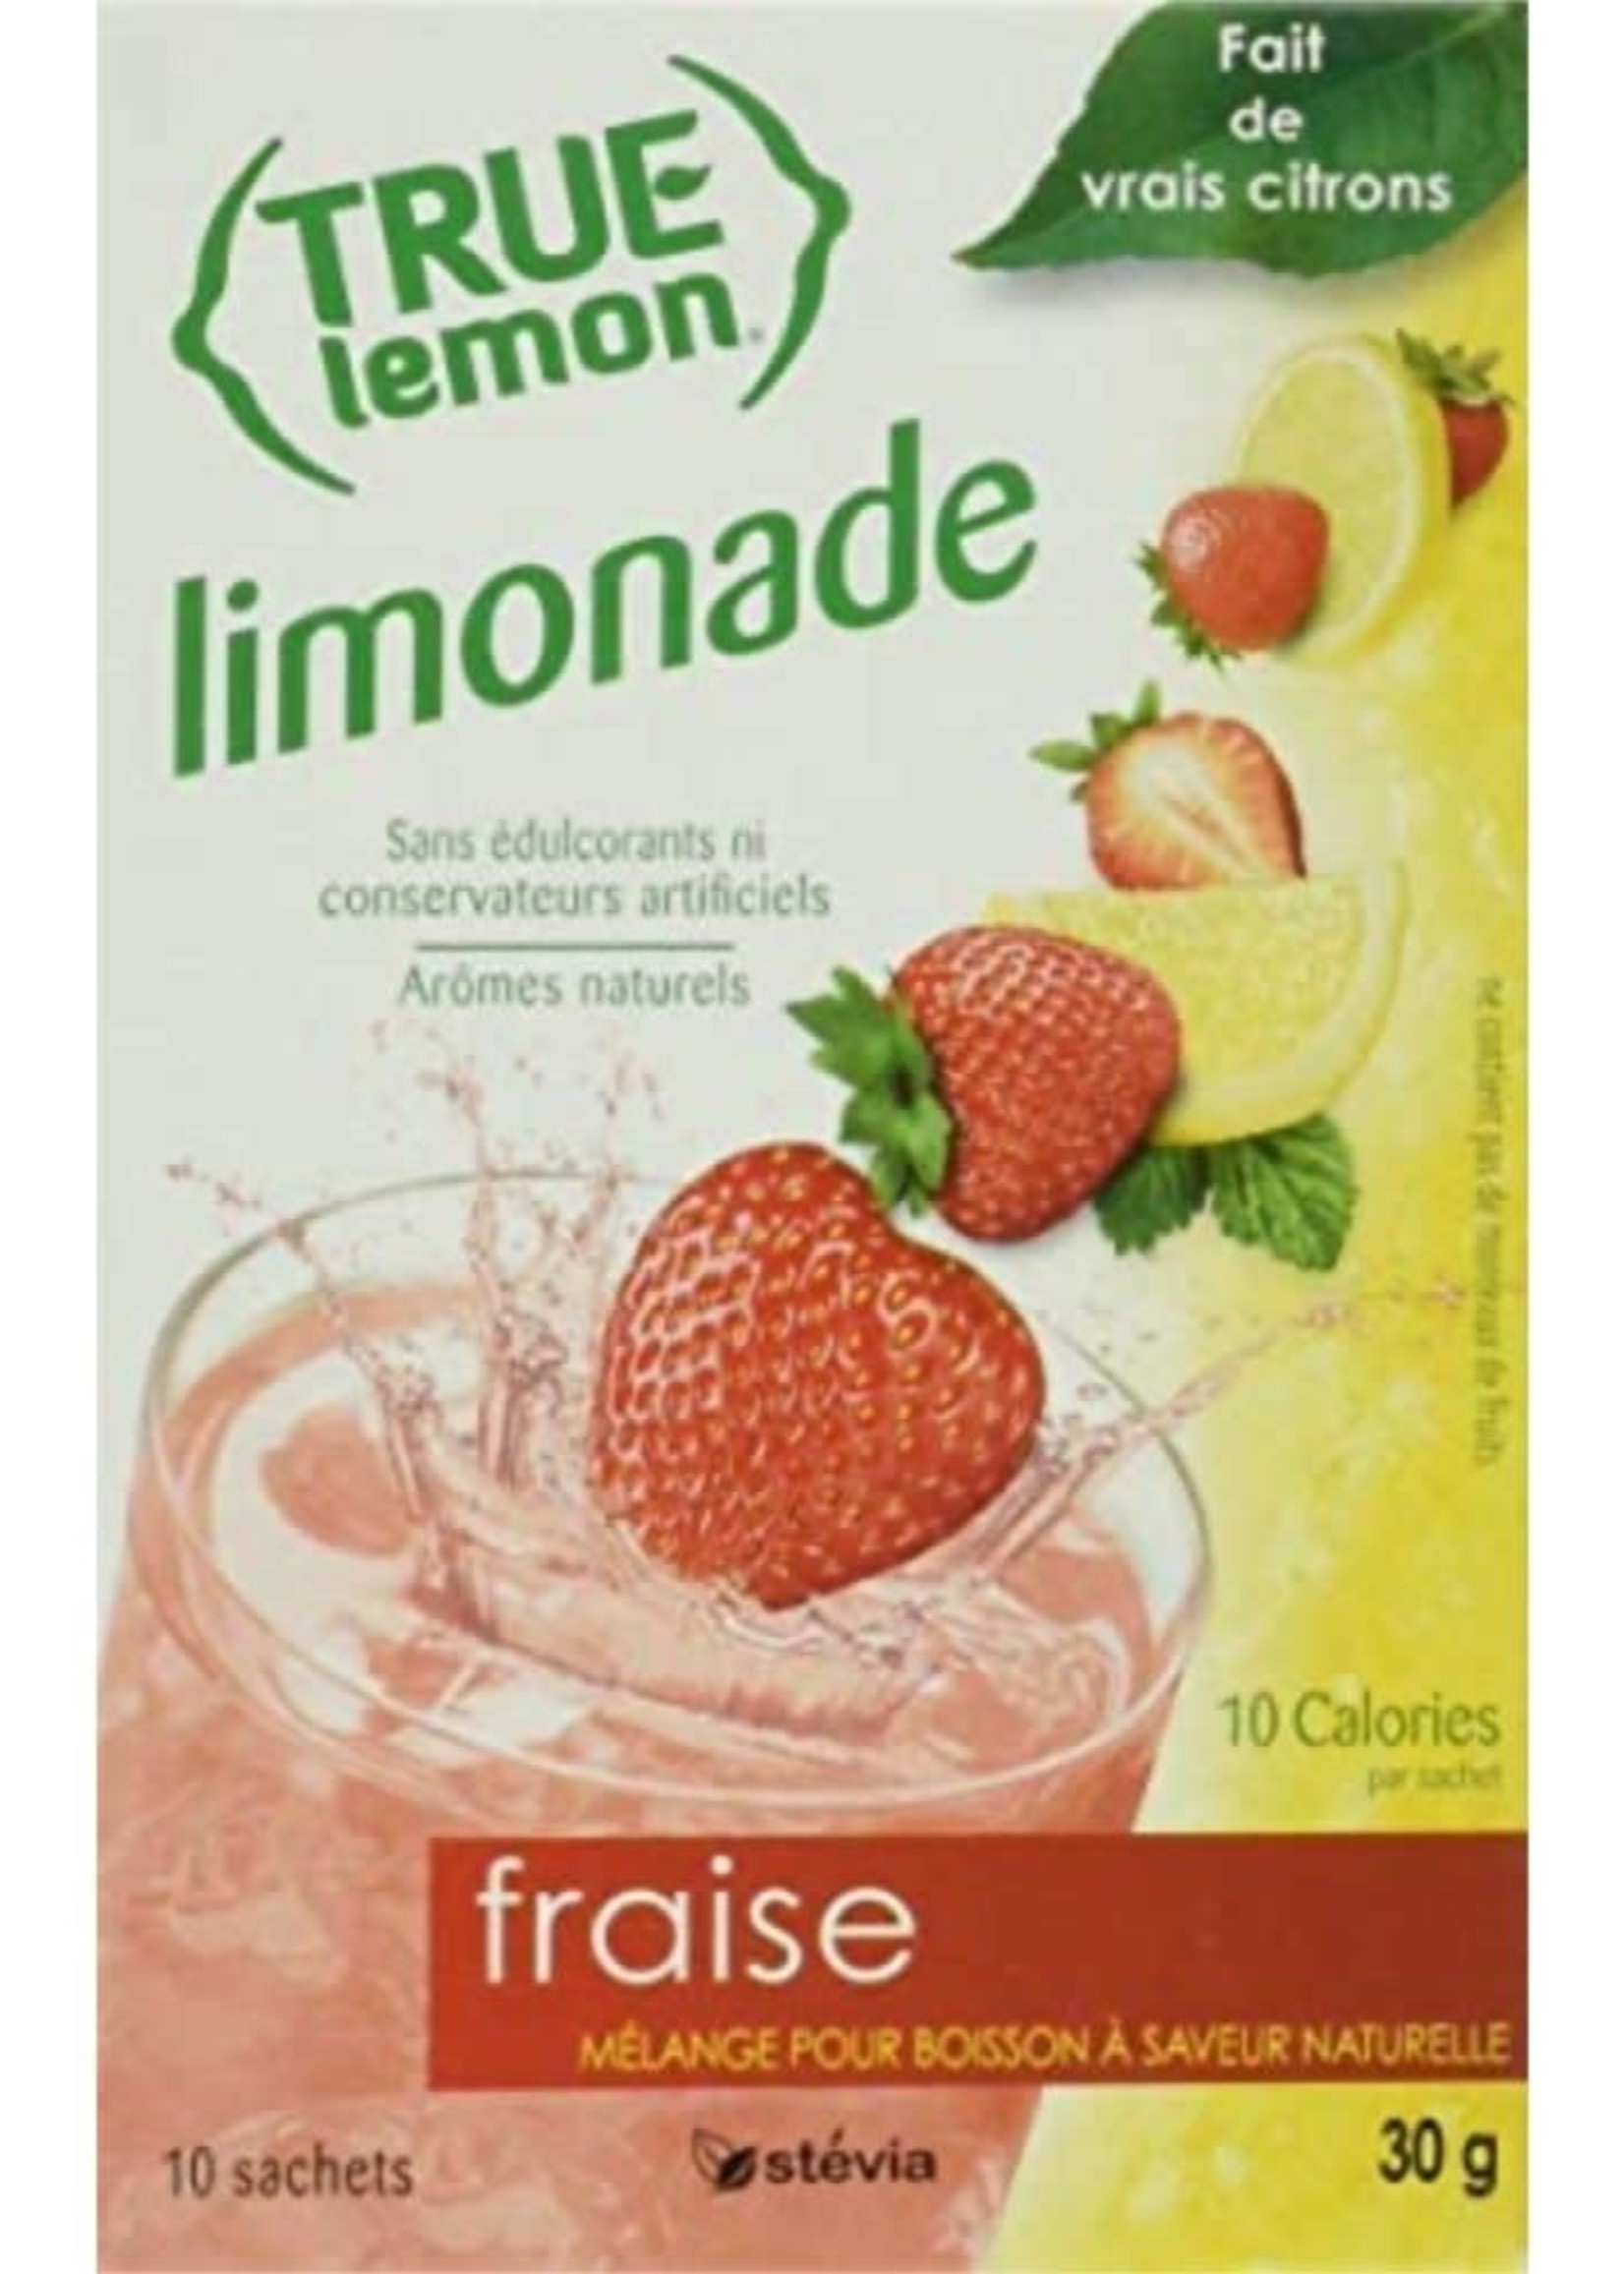 True Limonade 10 sachets 30g - TRUElemon (plusieurs saveurs)